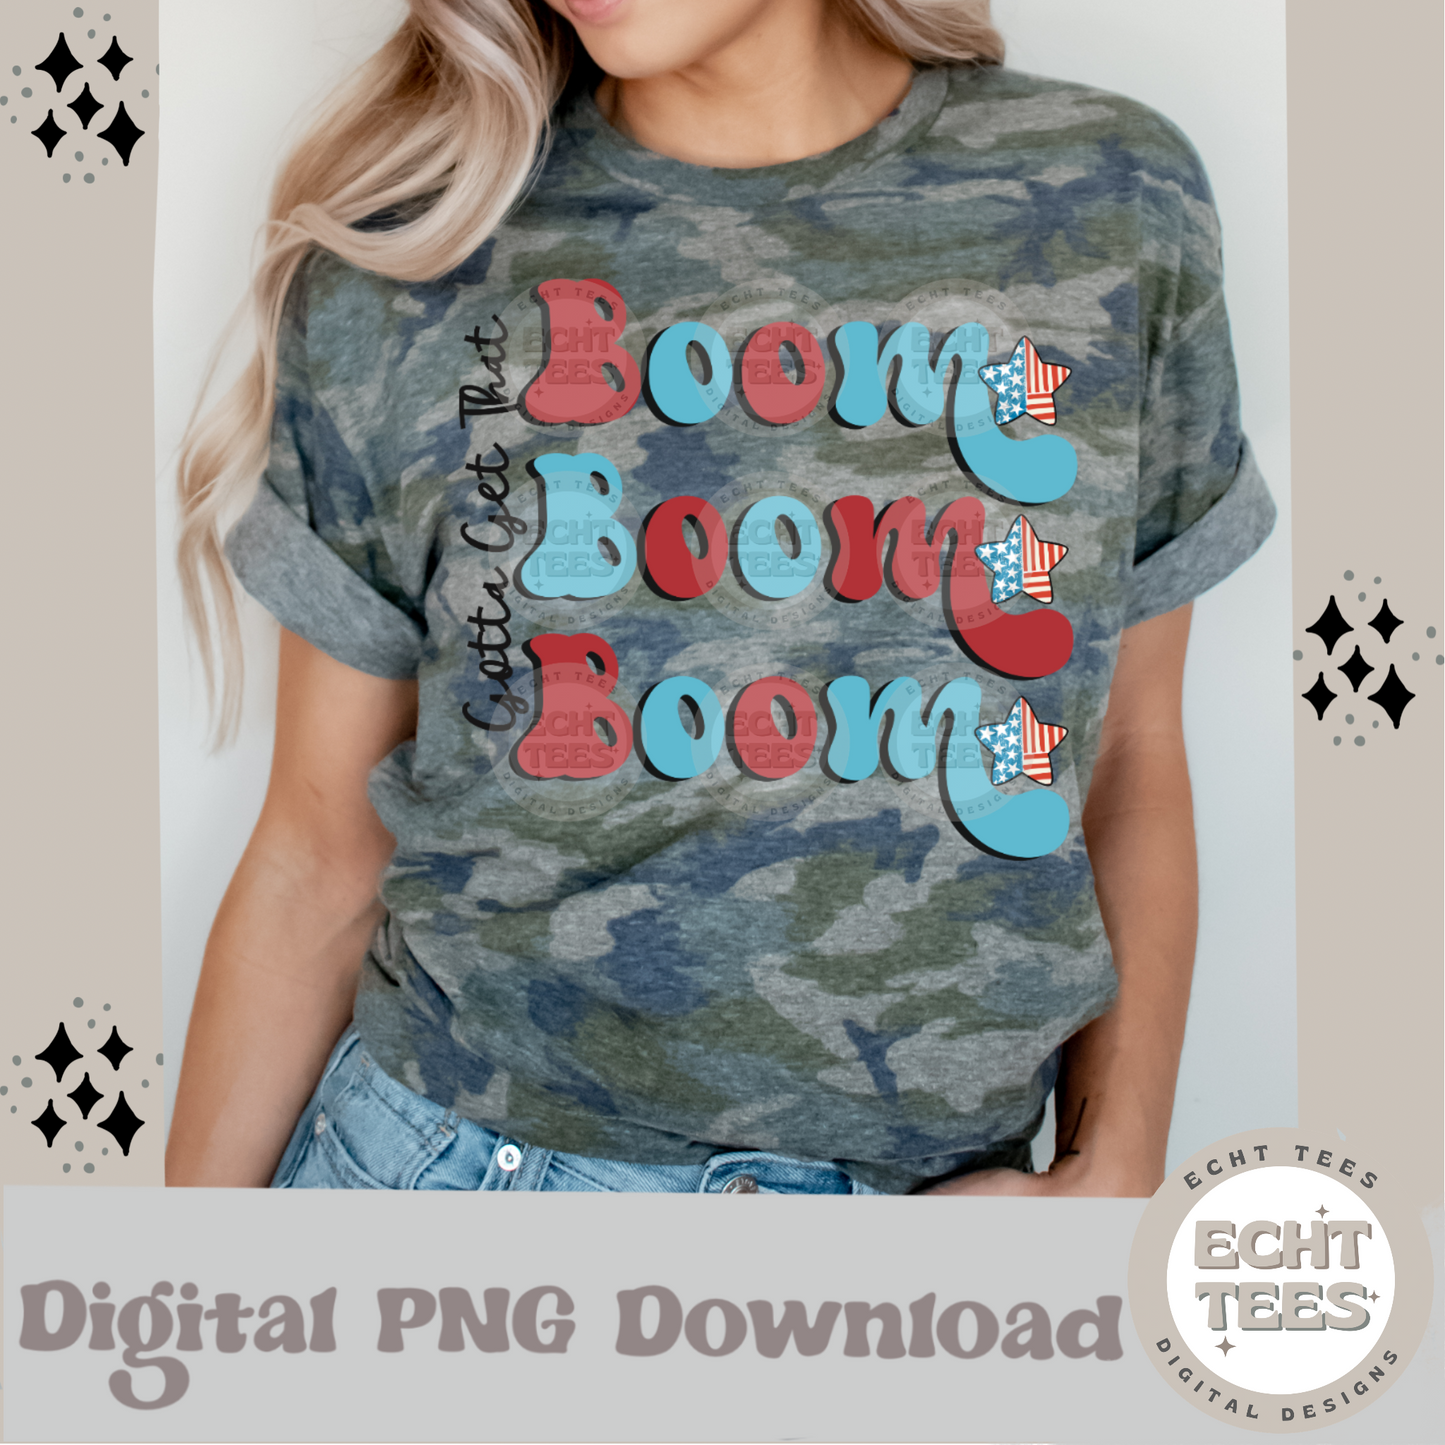 Gotta get that Boom Boom Boom PNG Digital Download